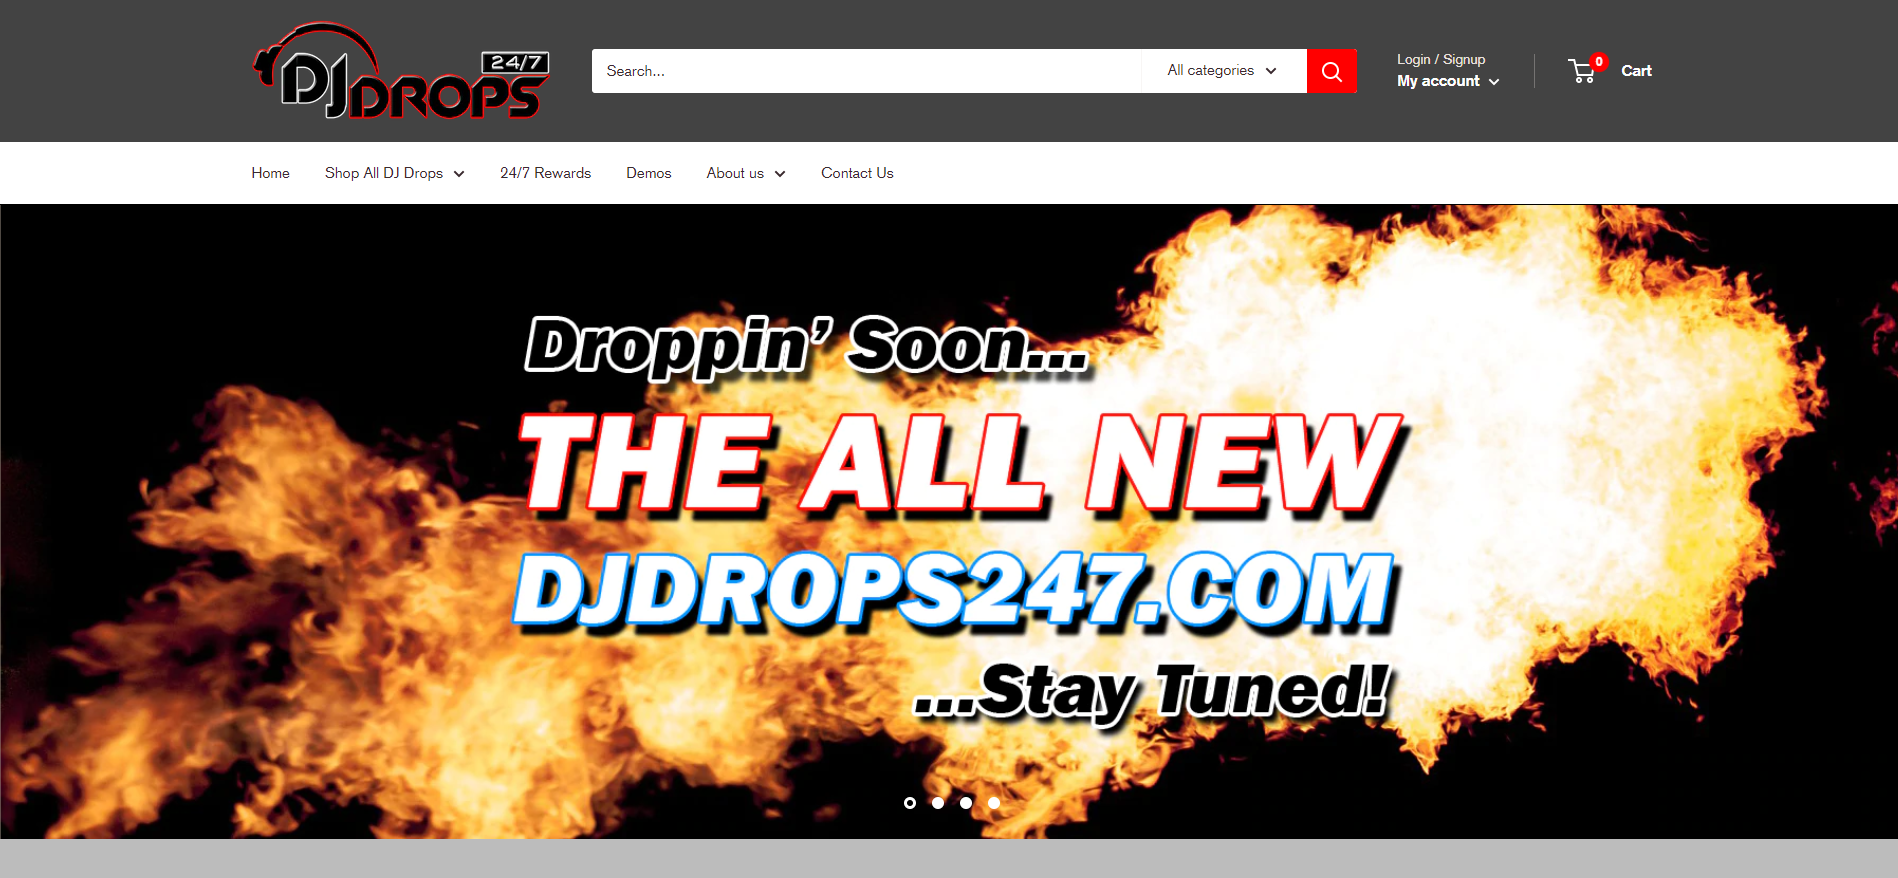 The ALL NEW DJDrops247.com Droppin' Soon!